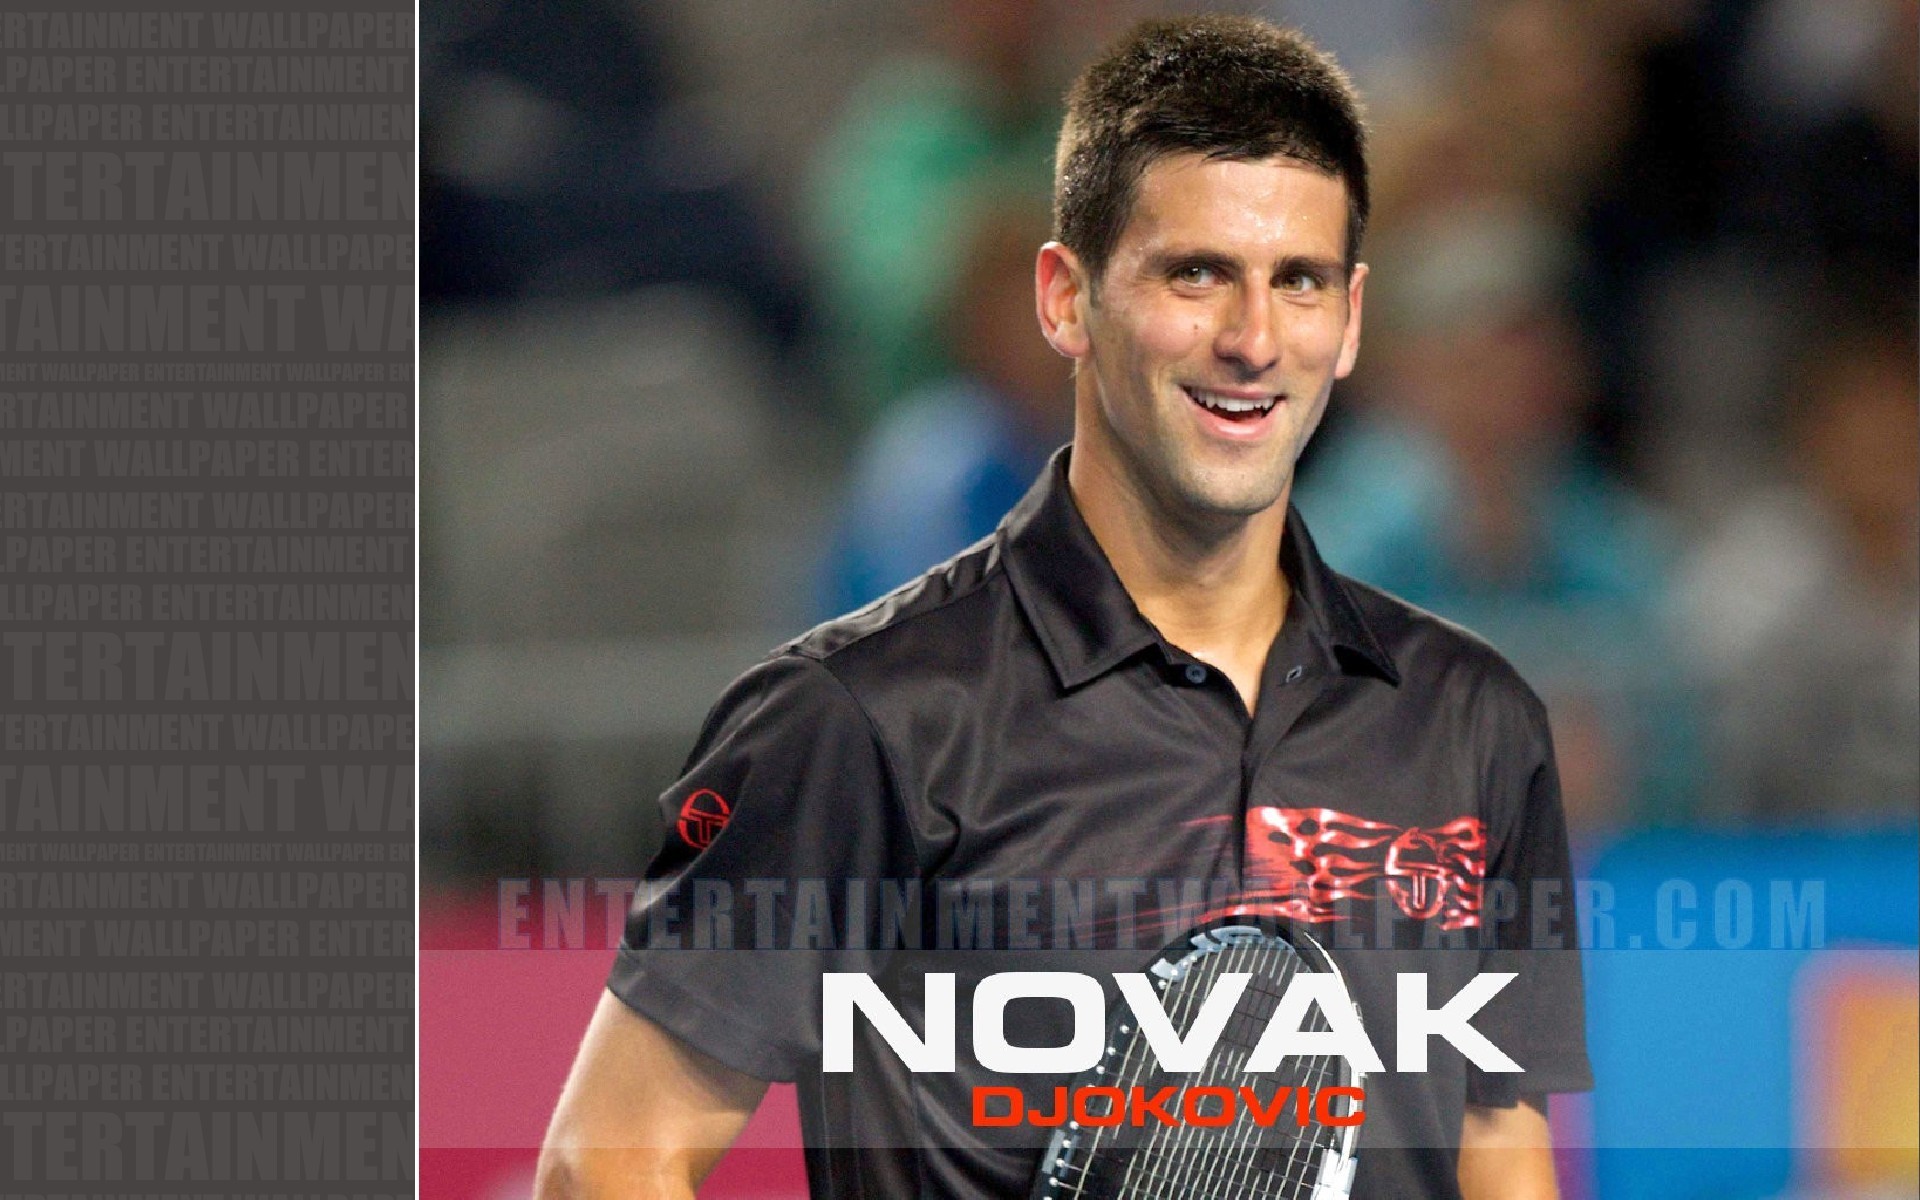 1920x1200 Novak Djokovic Wallpaper - Original size, download now.